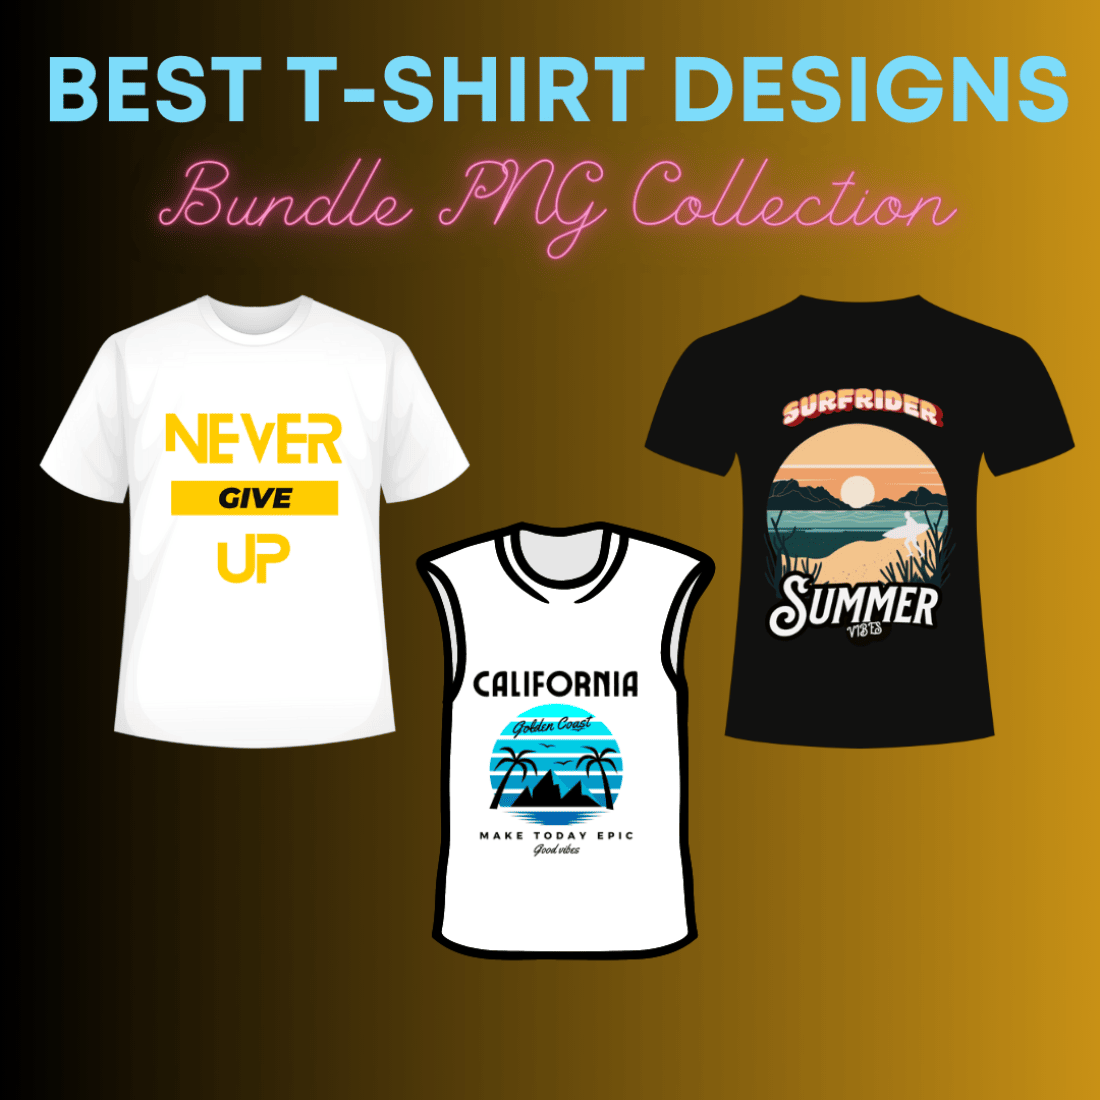 3 Best T-shirt Designs Bundle PNG Collection preview image.